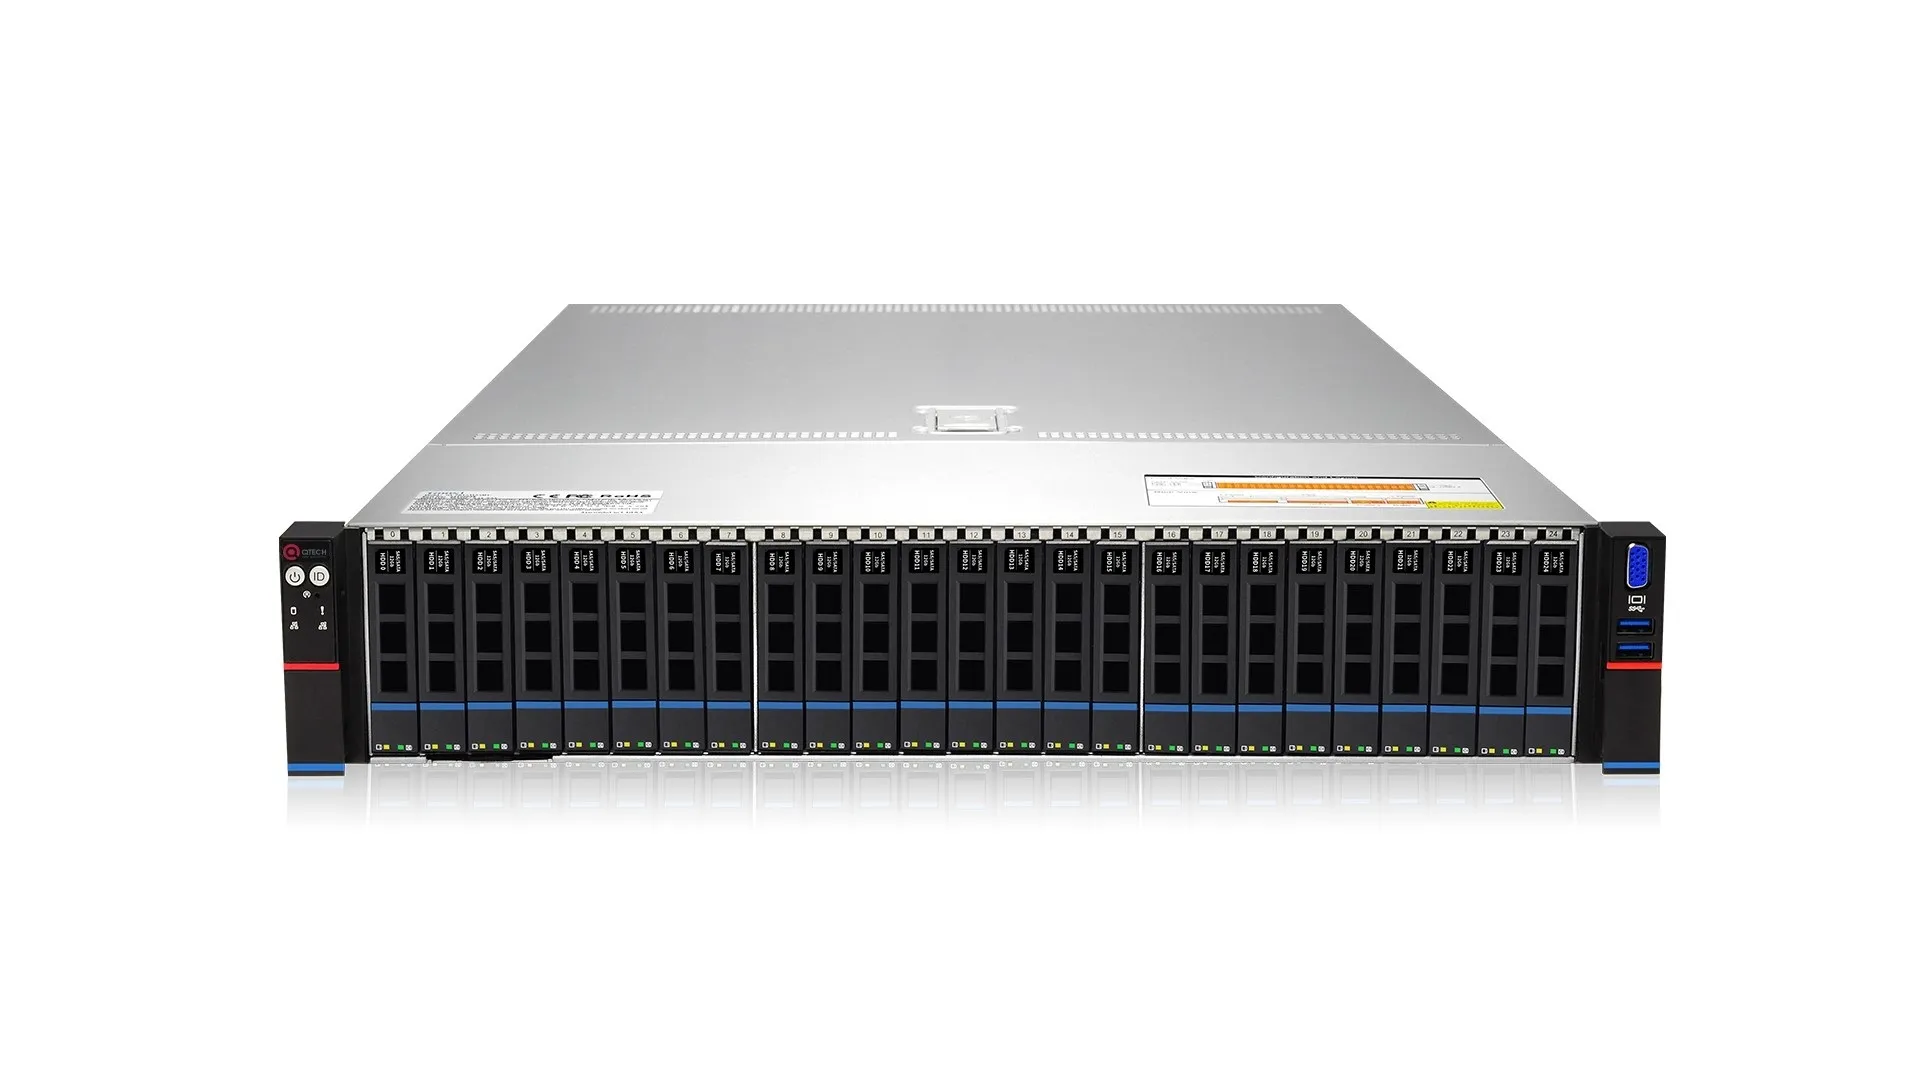 Сервер QSRV-262502